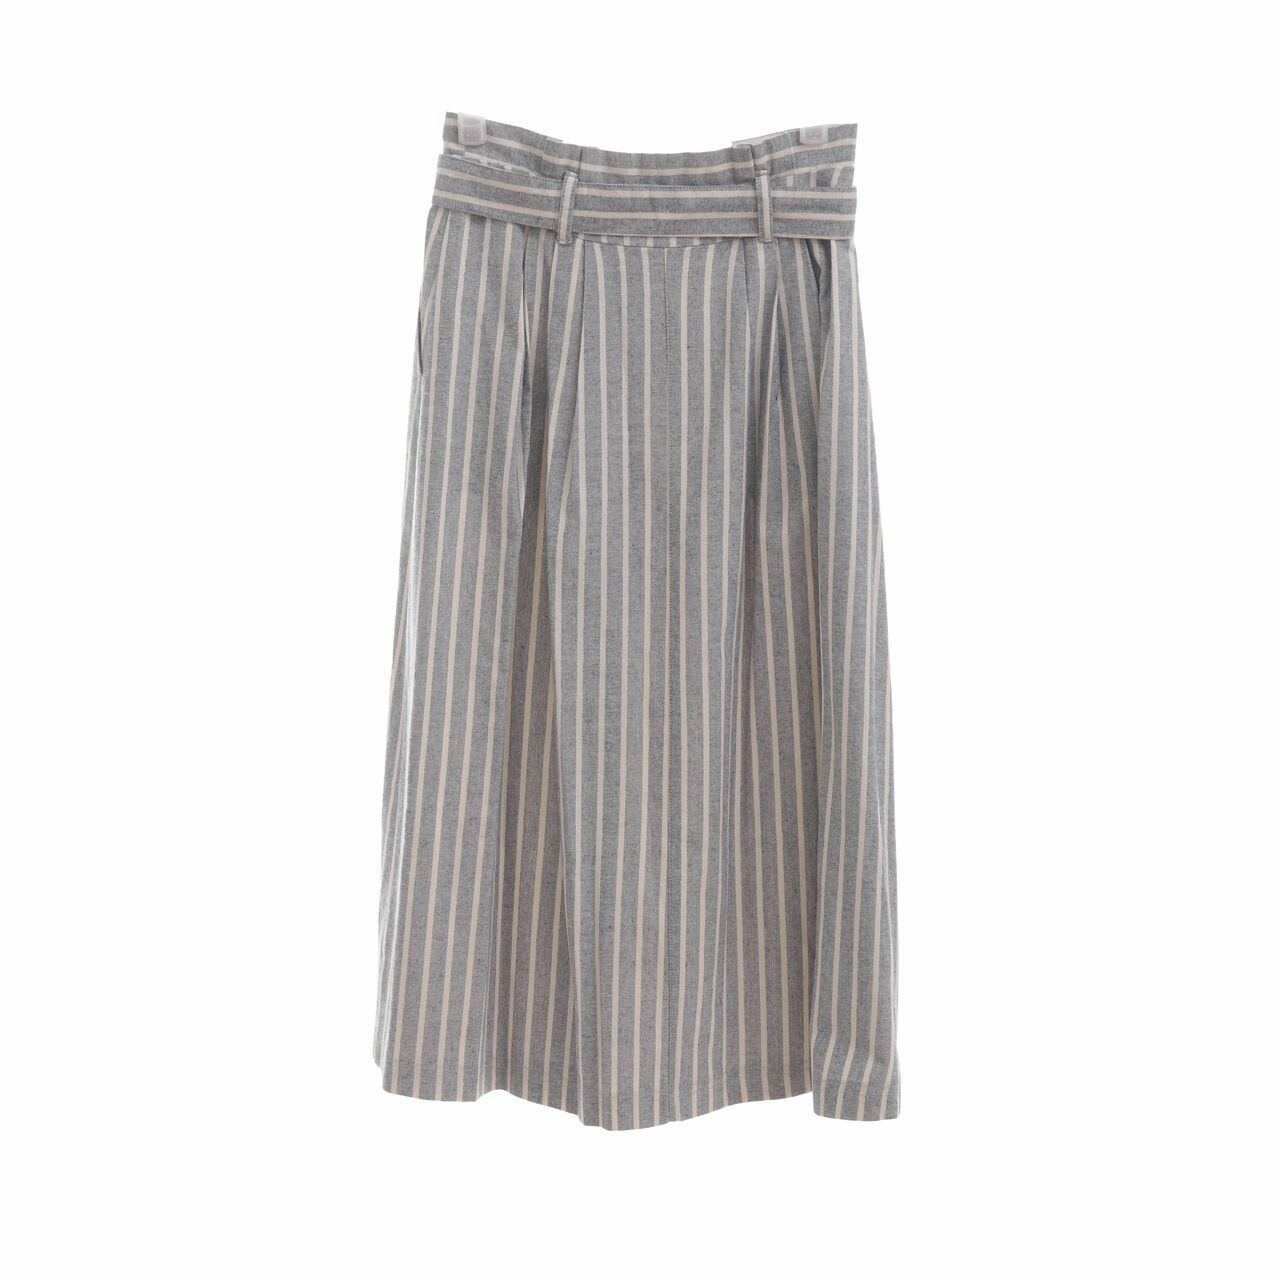 Topshop Light Grey Stripes Midi Skirt